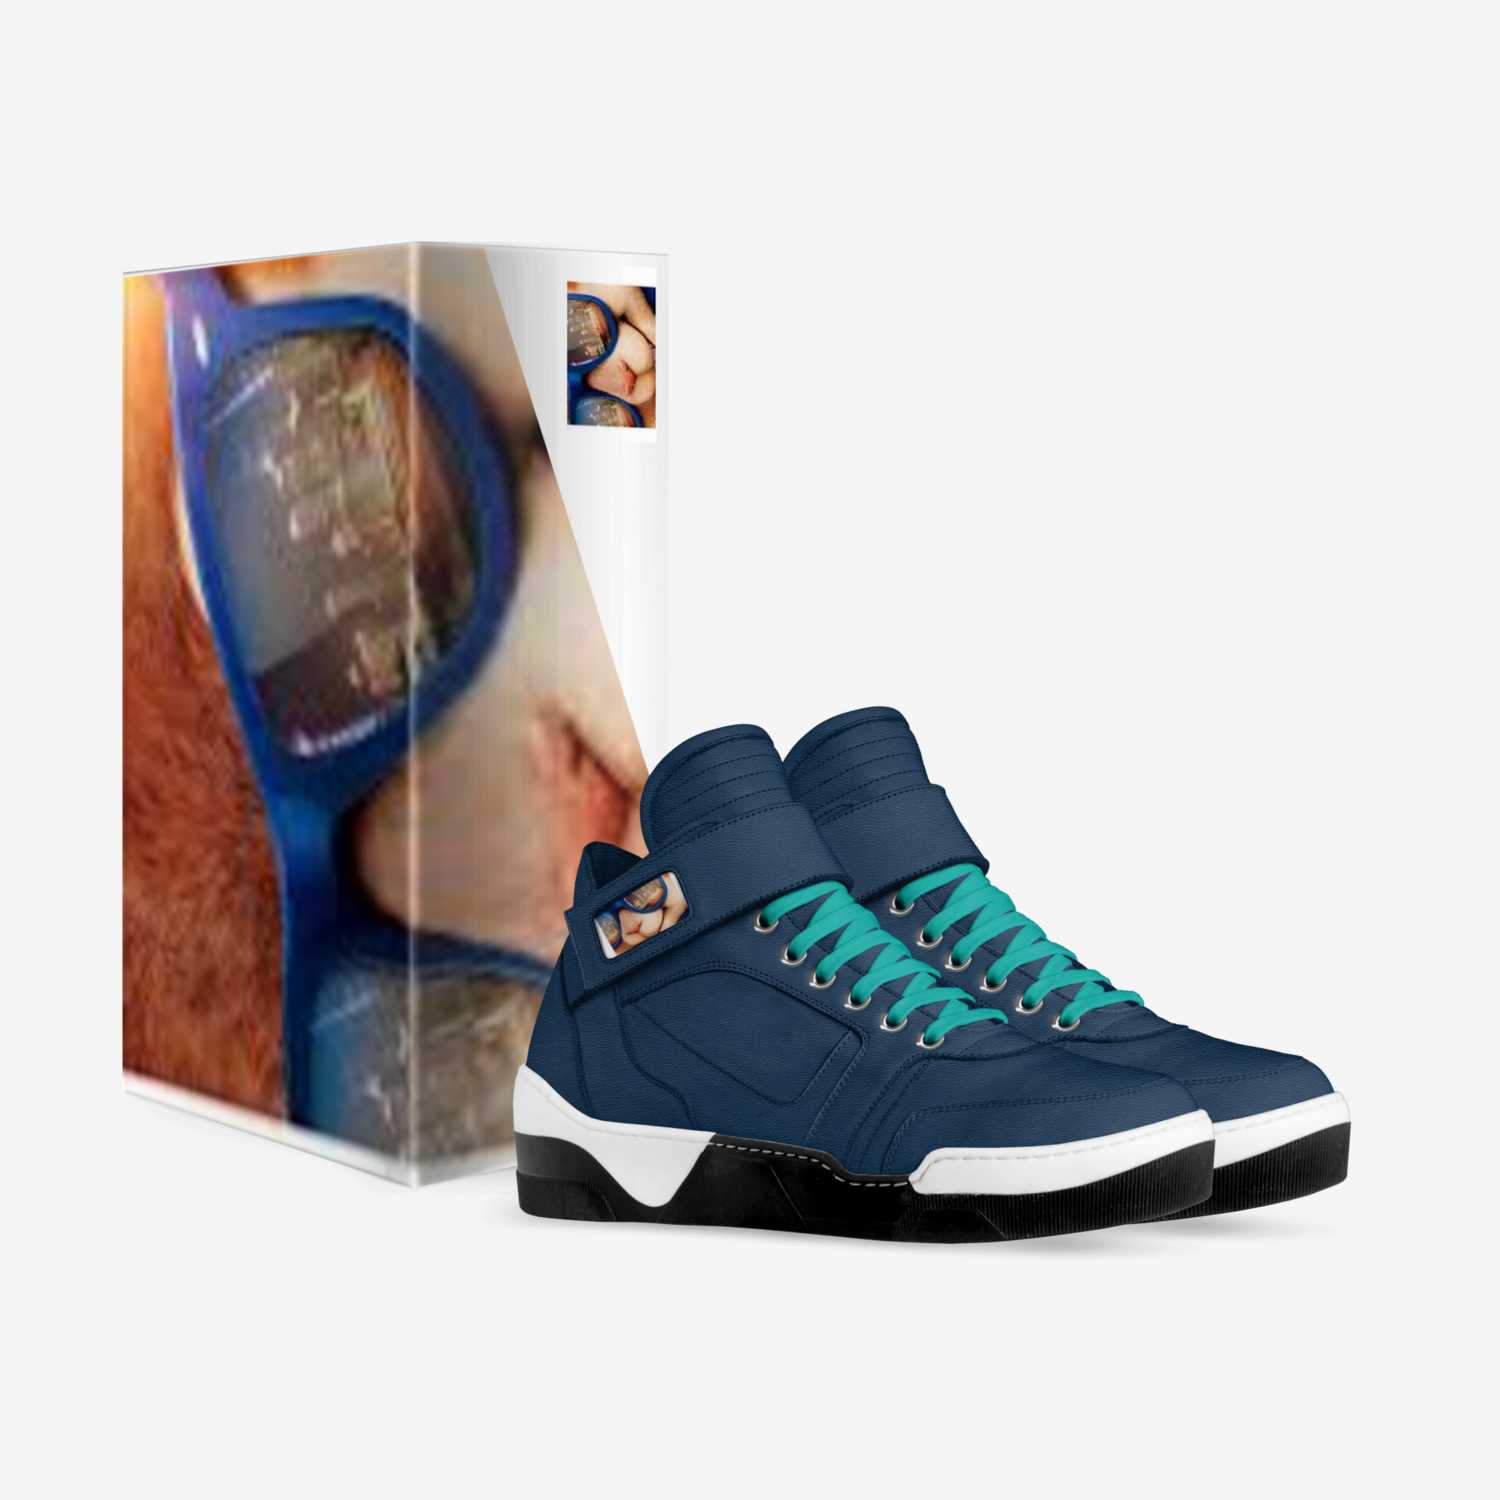 Simon custom made in Italy shoes by Jyalon Freeman | Box view